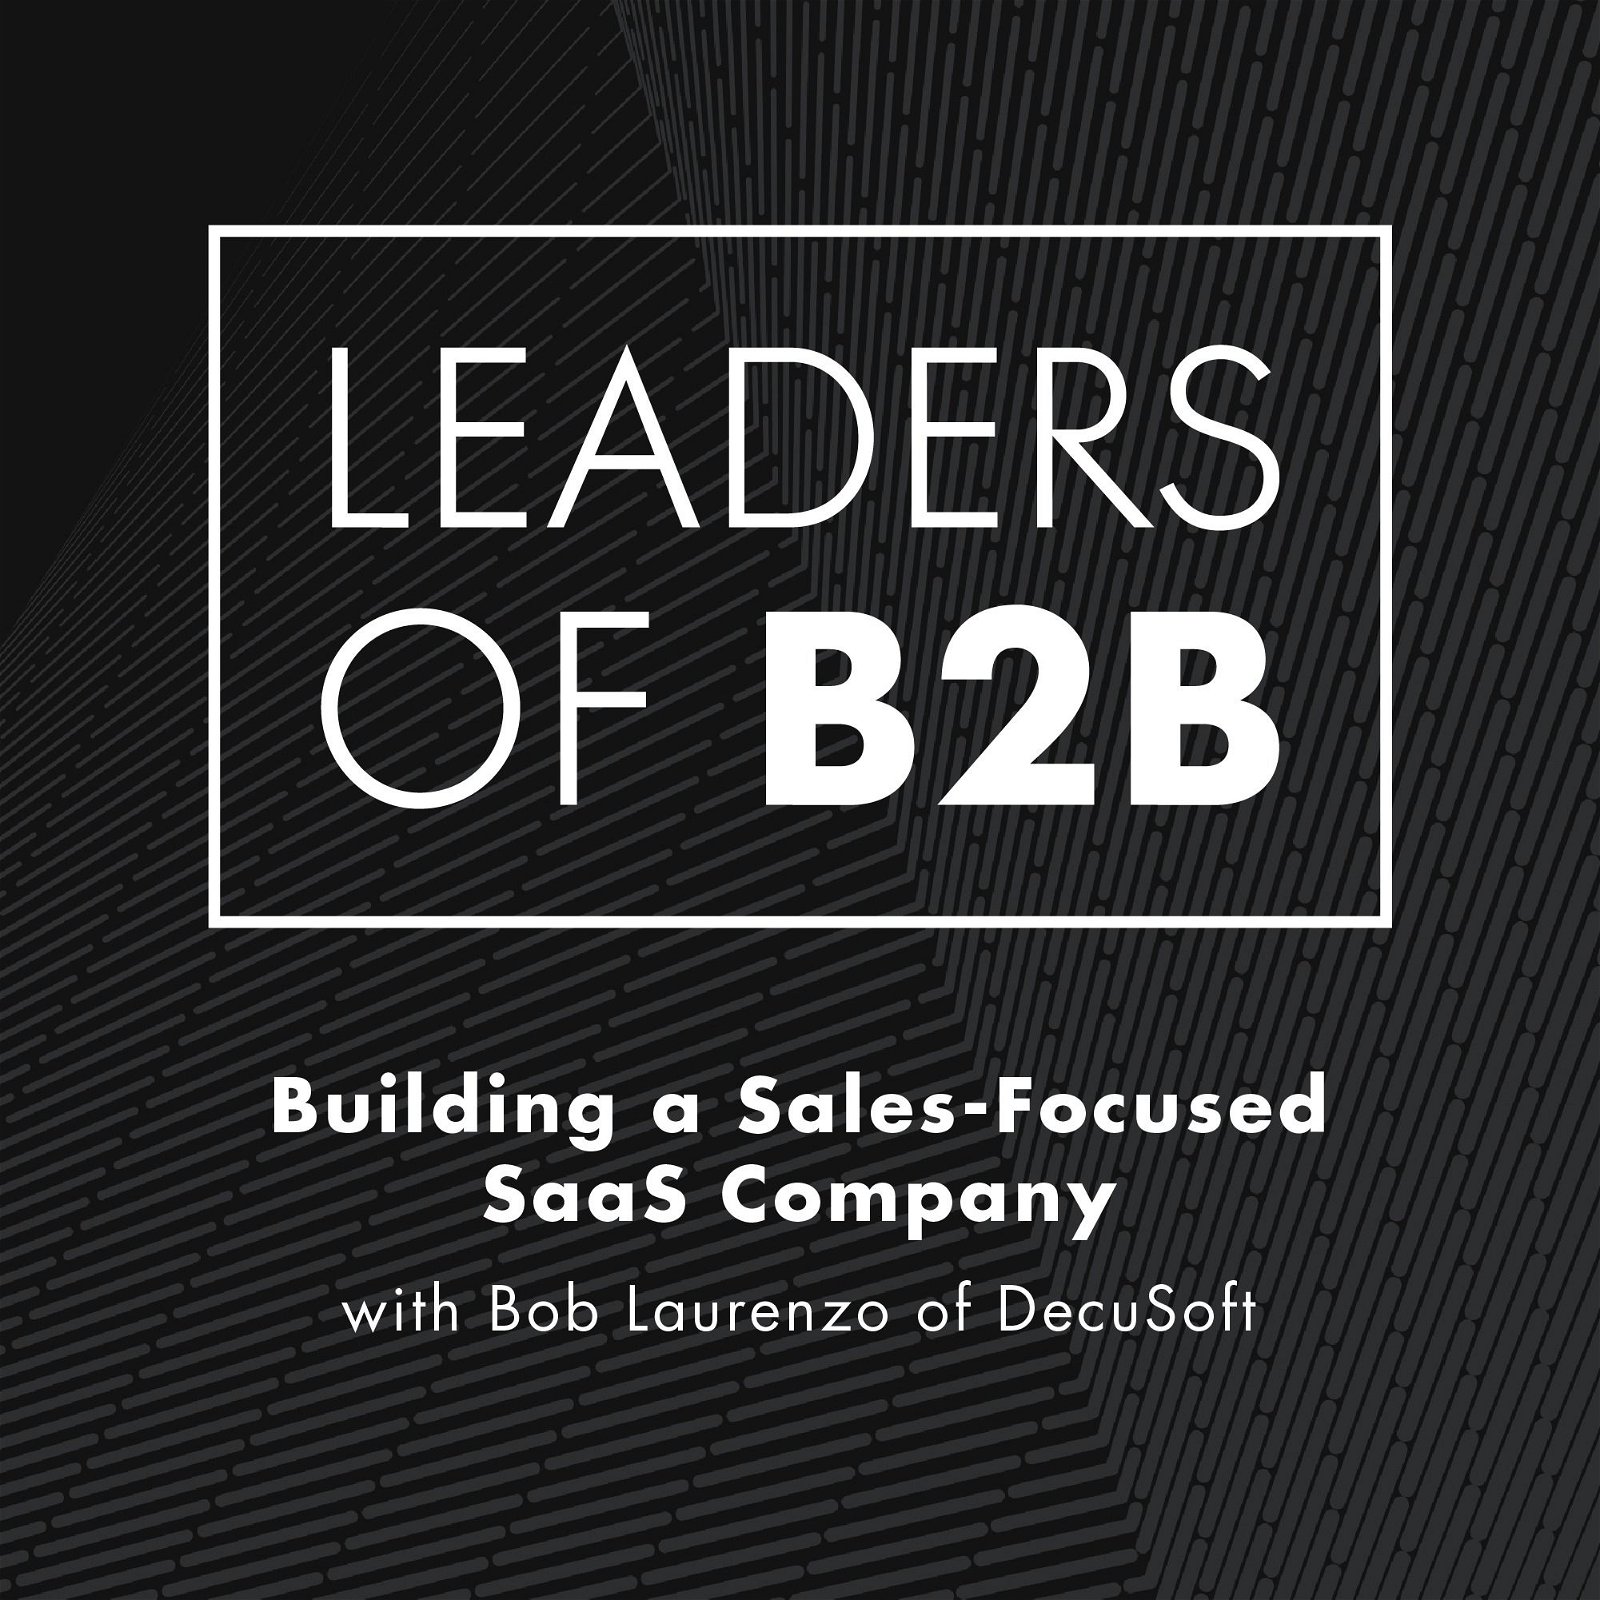 Building a Sales-Focused SaaS Company with Bob Laurenzo of DecuSoft